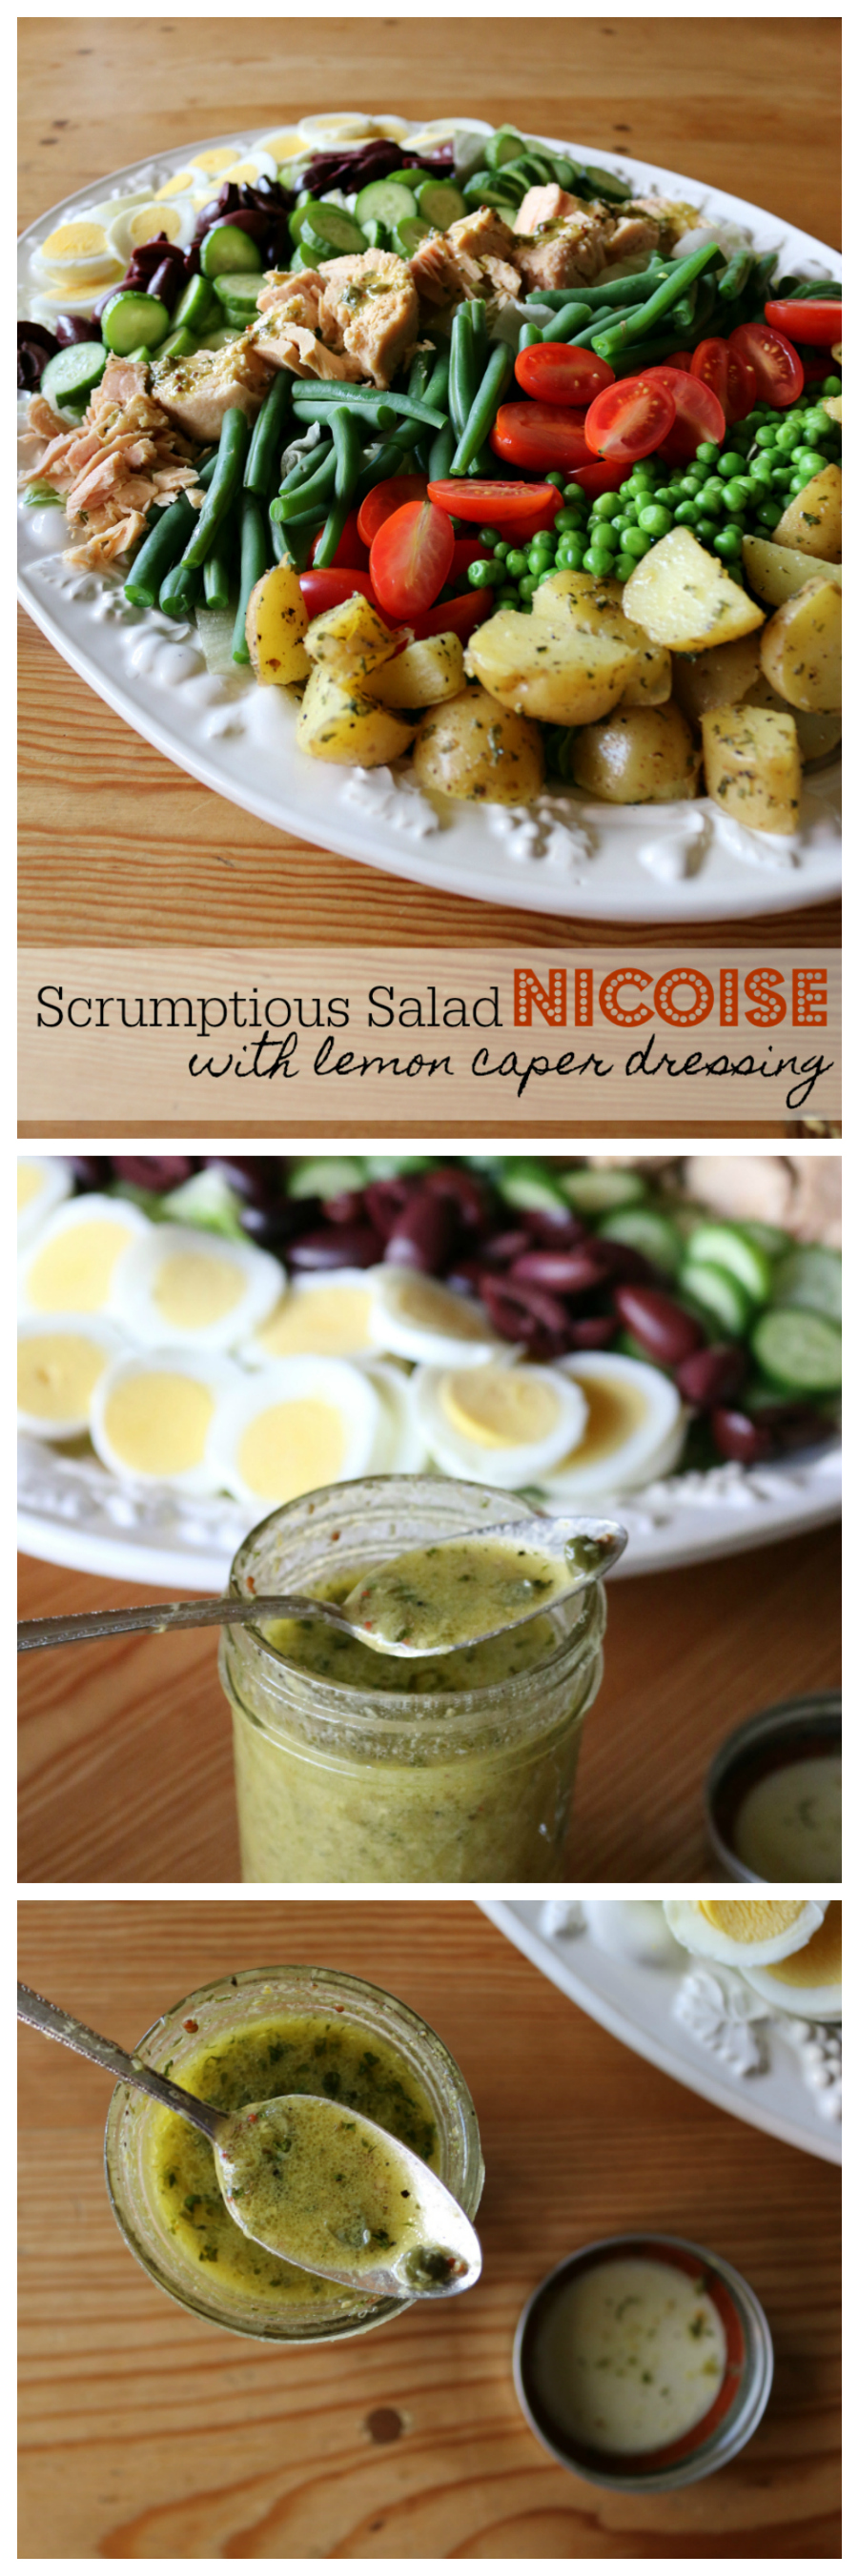 A Scumptious Salad Nicoise Recipe with Lemon Caper Dressing CeceliasGoodStuff.com Good Food for Good People